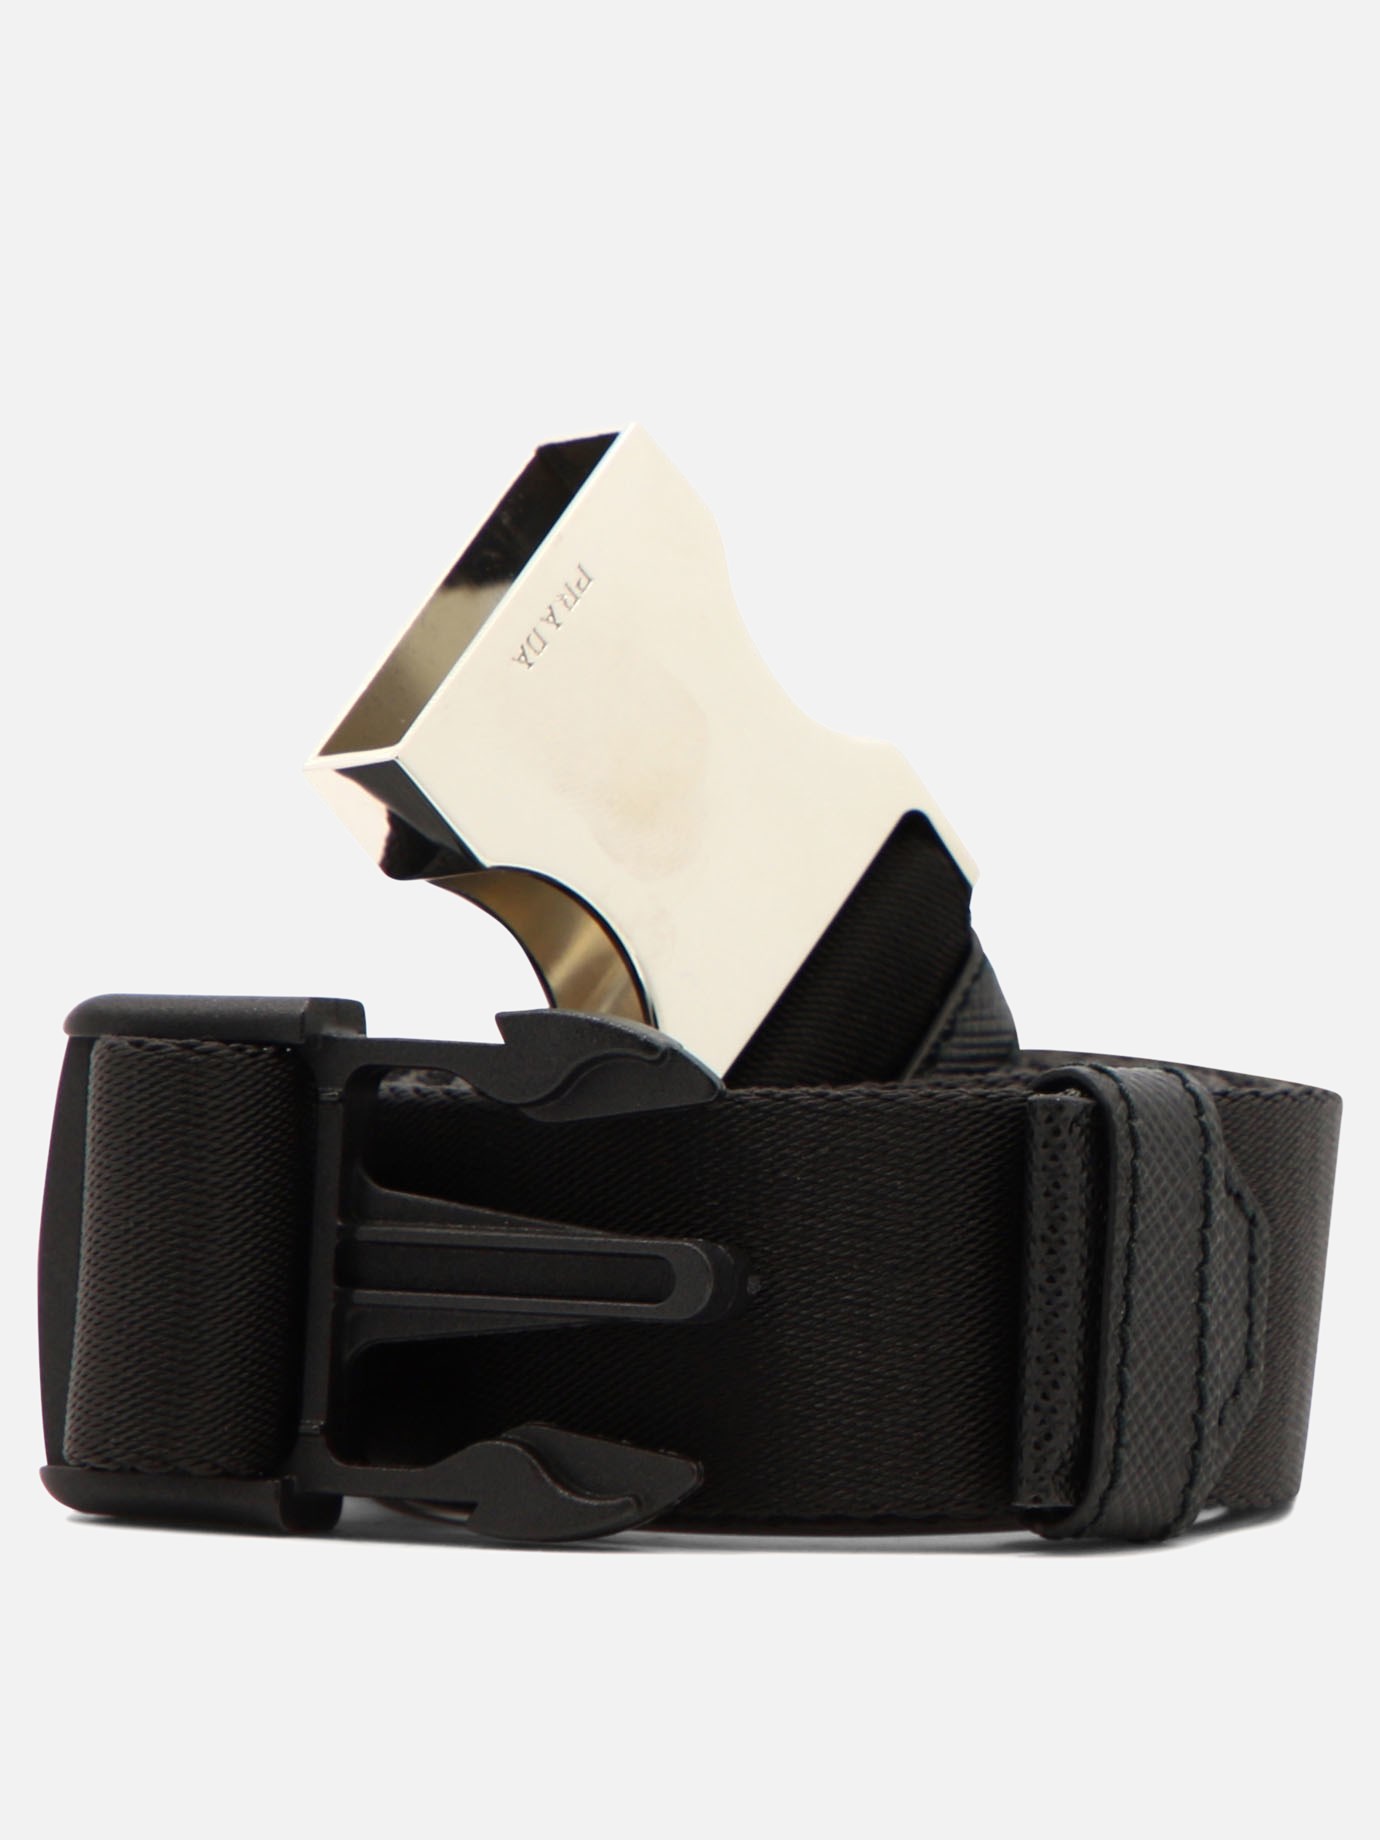 Woven nylon belt by Prada